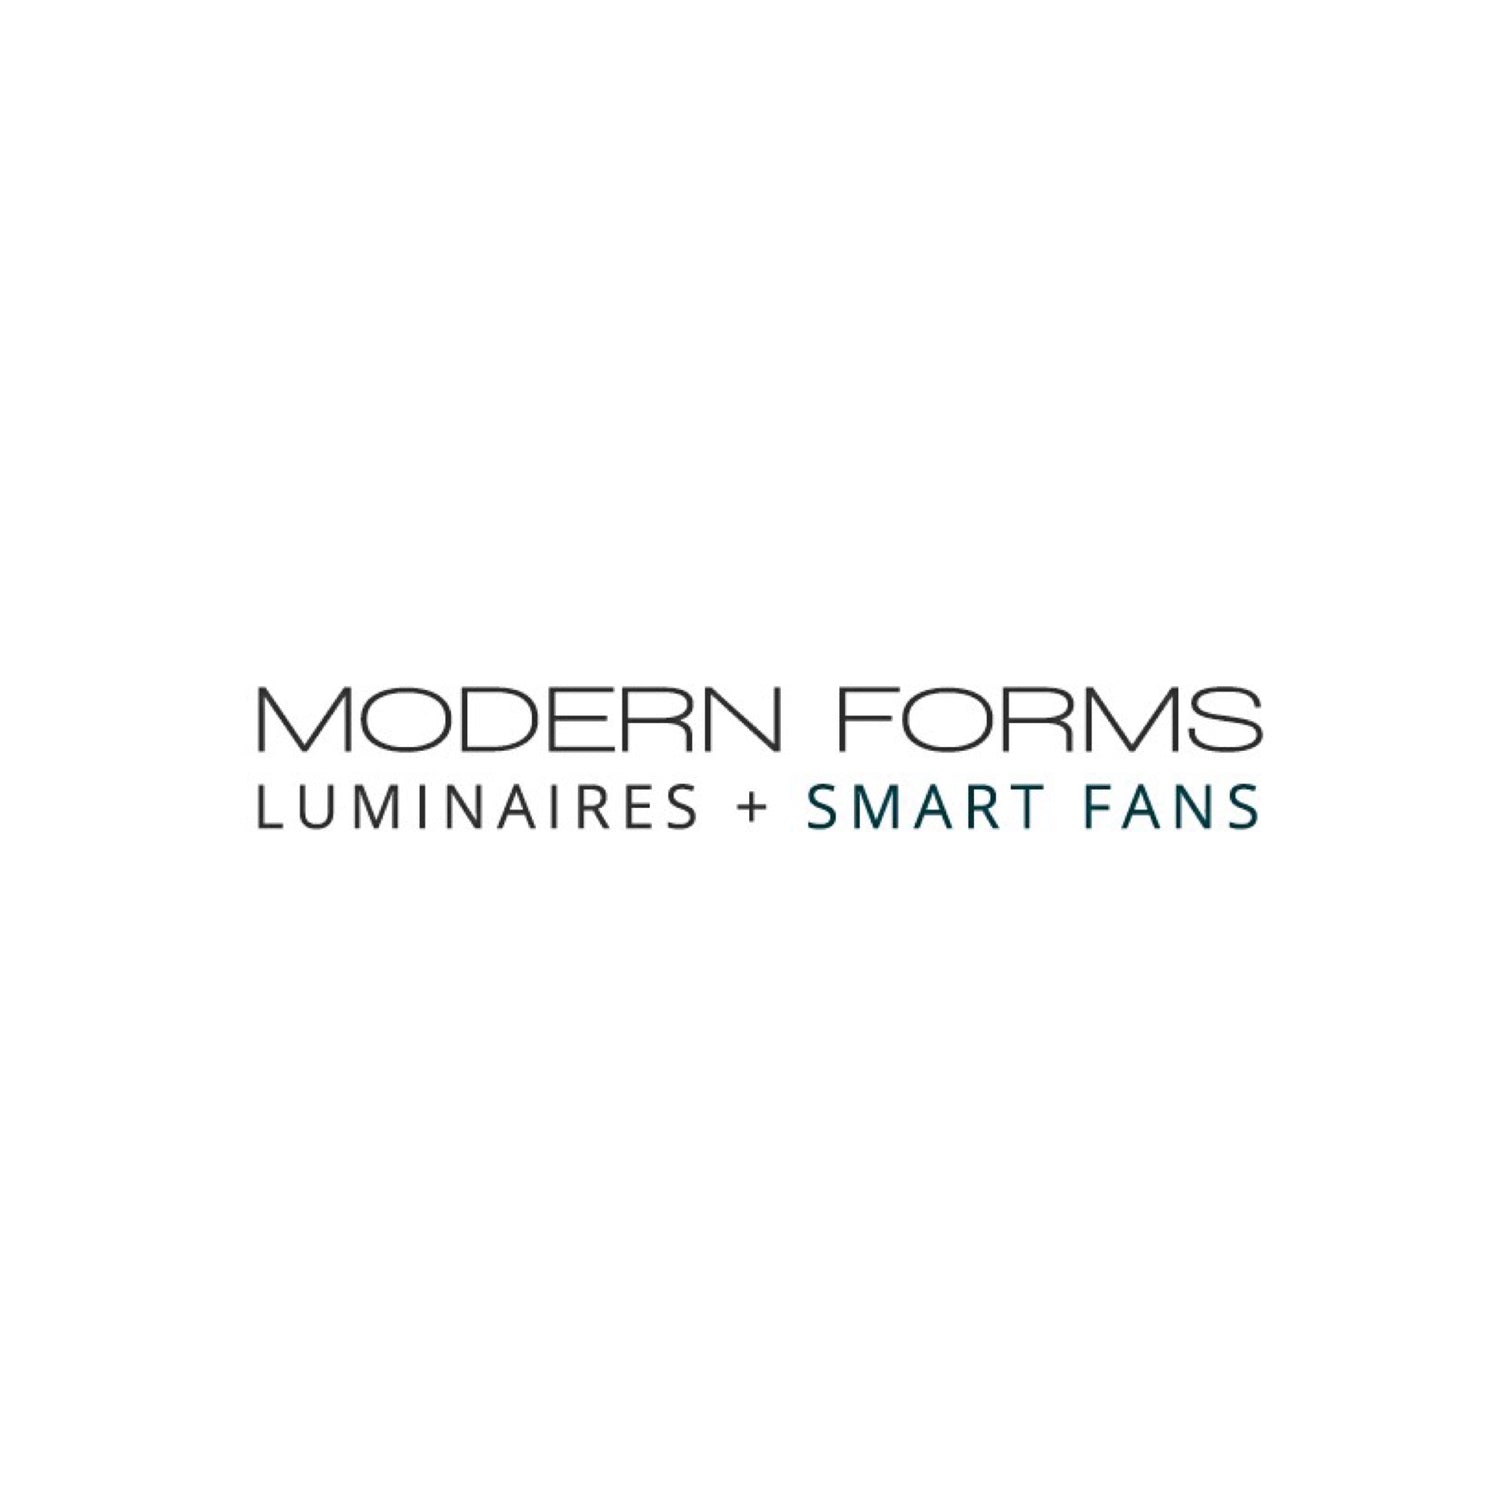 MODERN FORMS